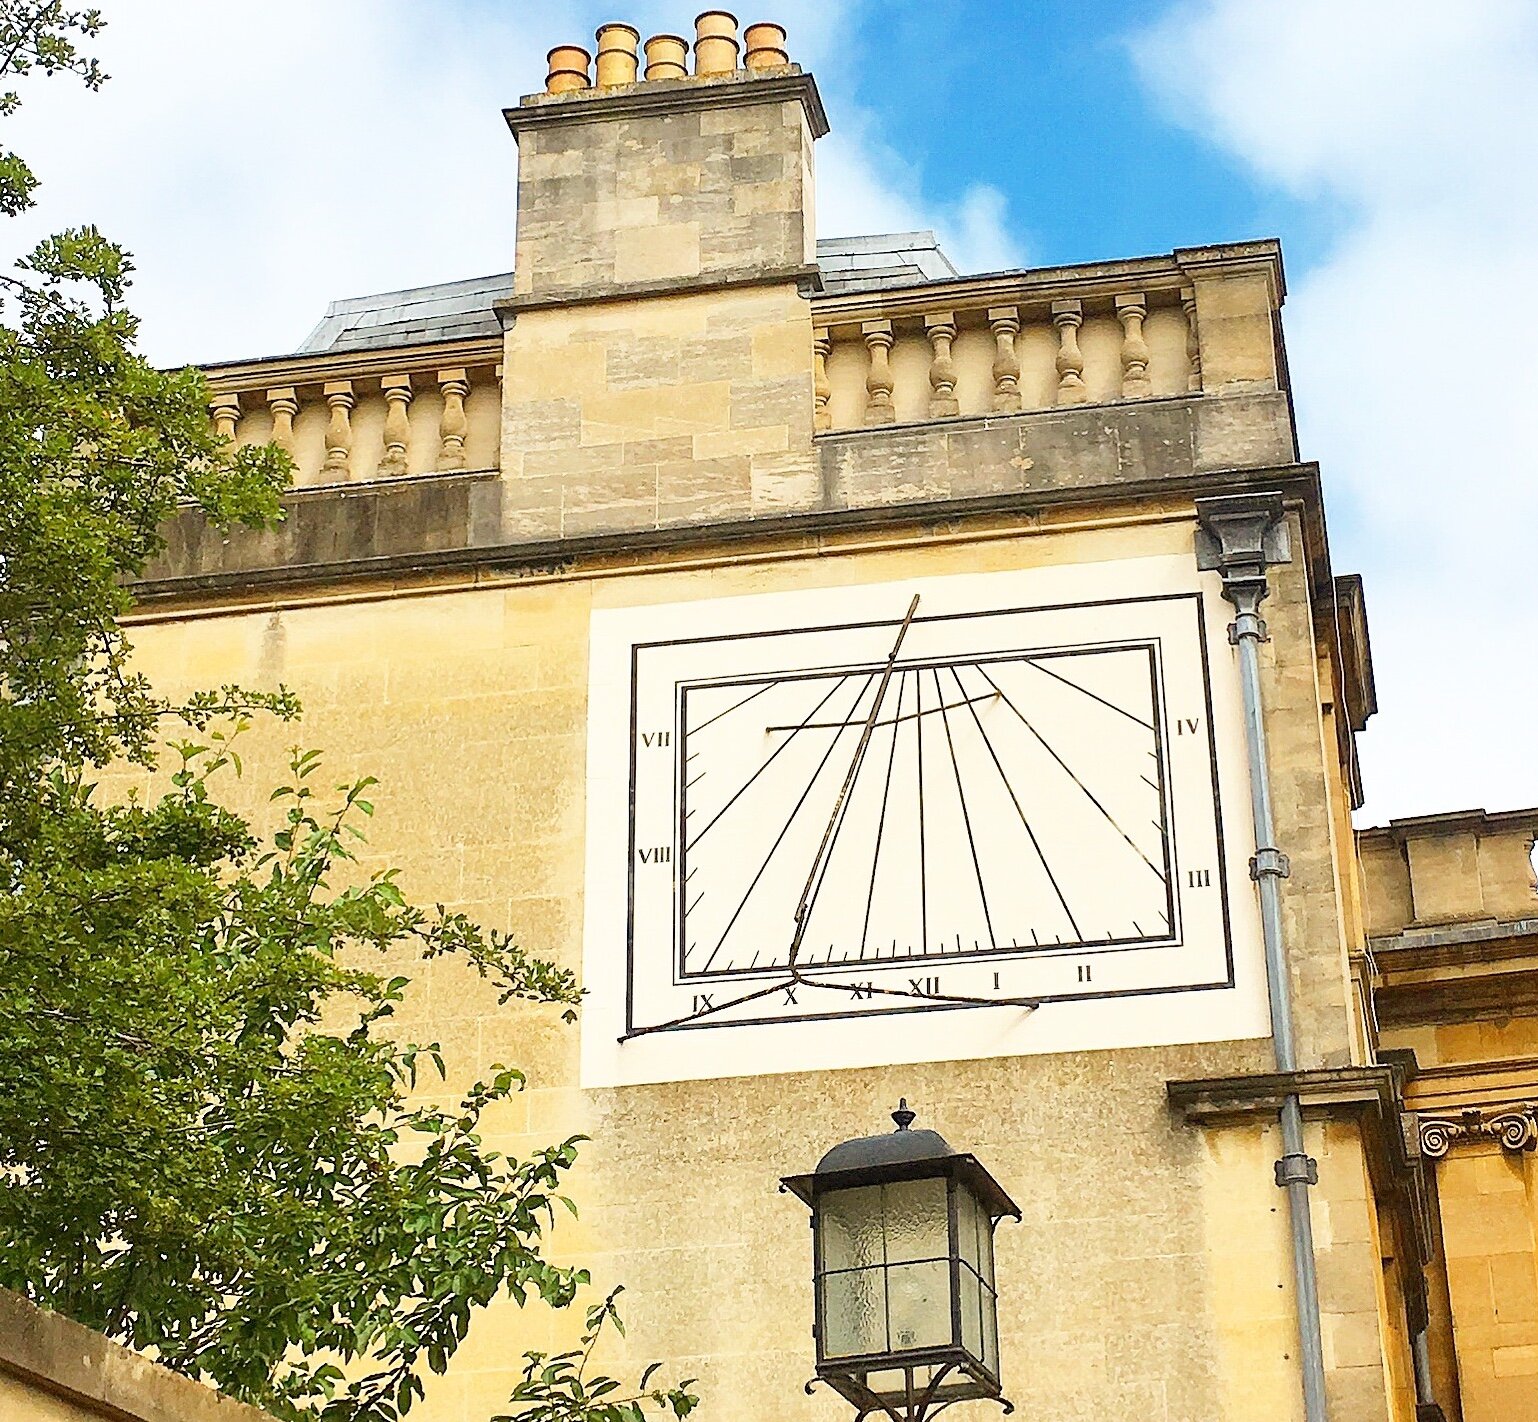 Sundial on Christ Church, Oxford, England (Image courtesy of the author).